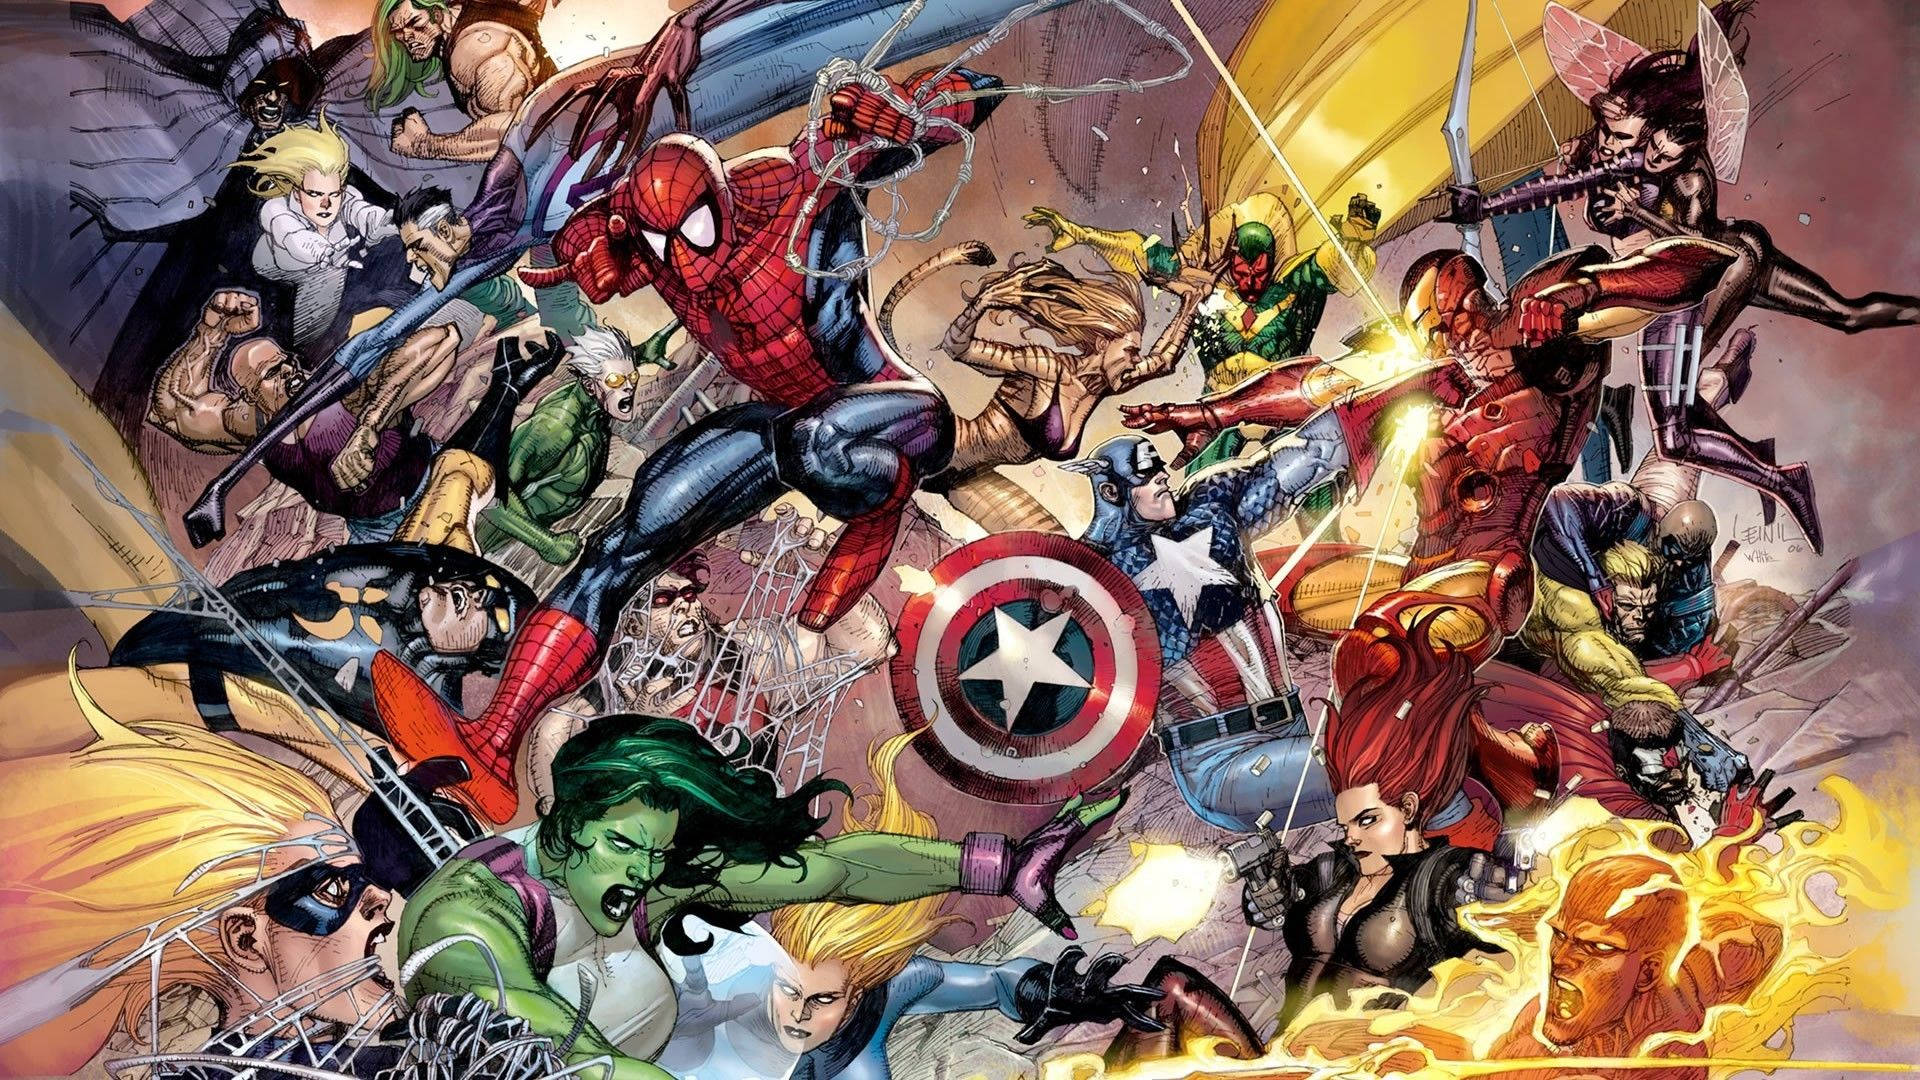 Marvel comics superheroes war with villains.